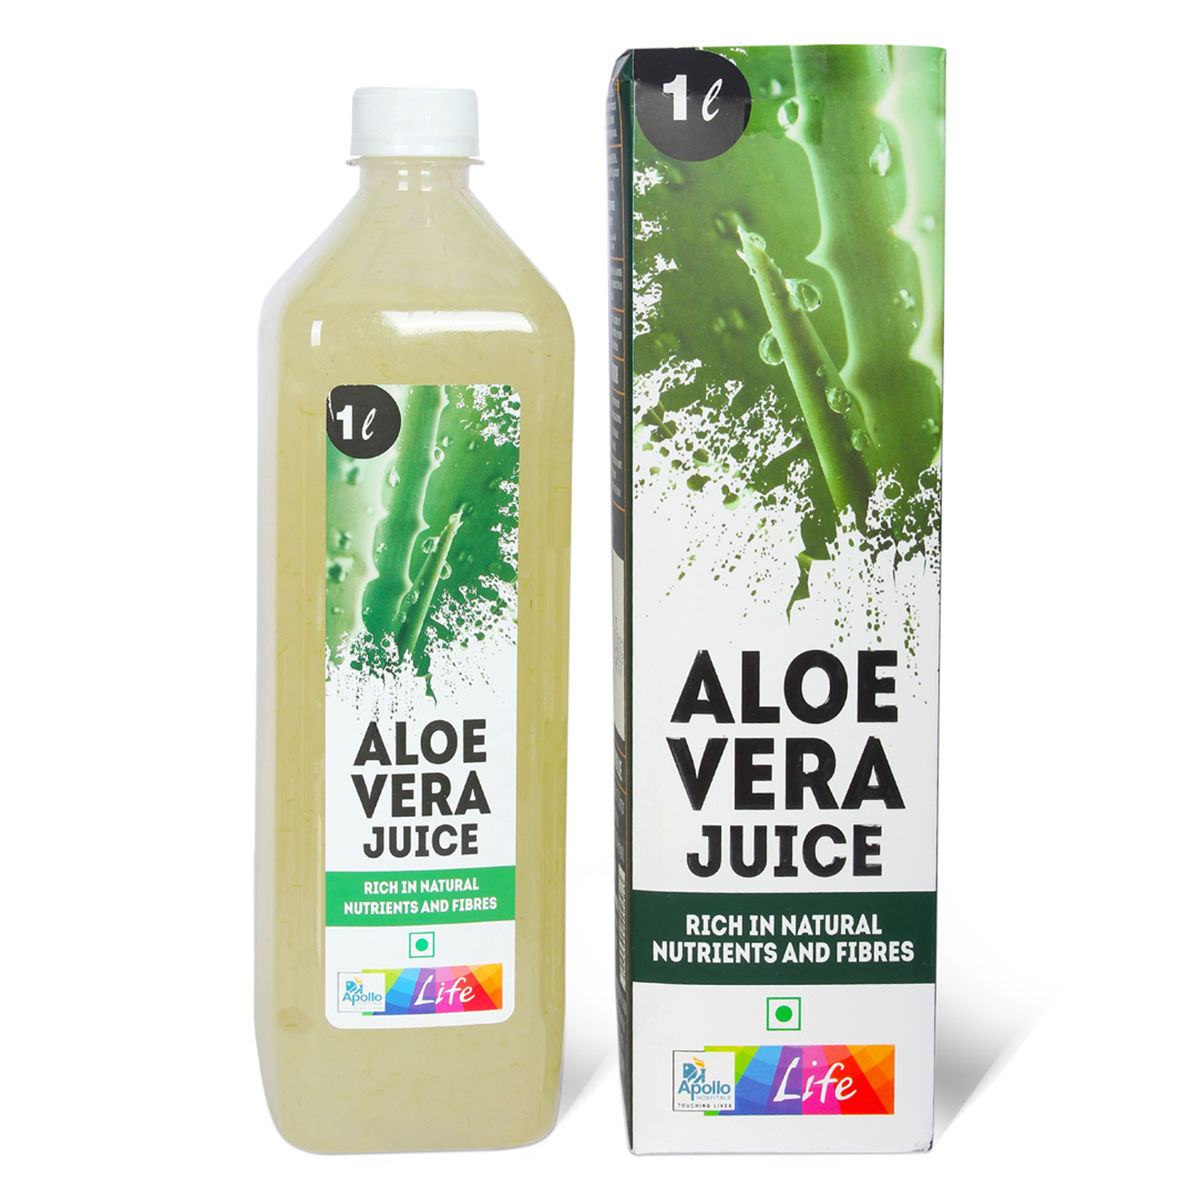 Buy Apollo Life Aloe Vera Juice, 1 Litre Online